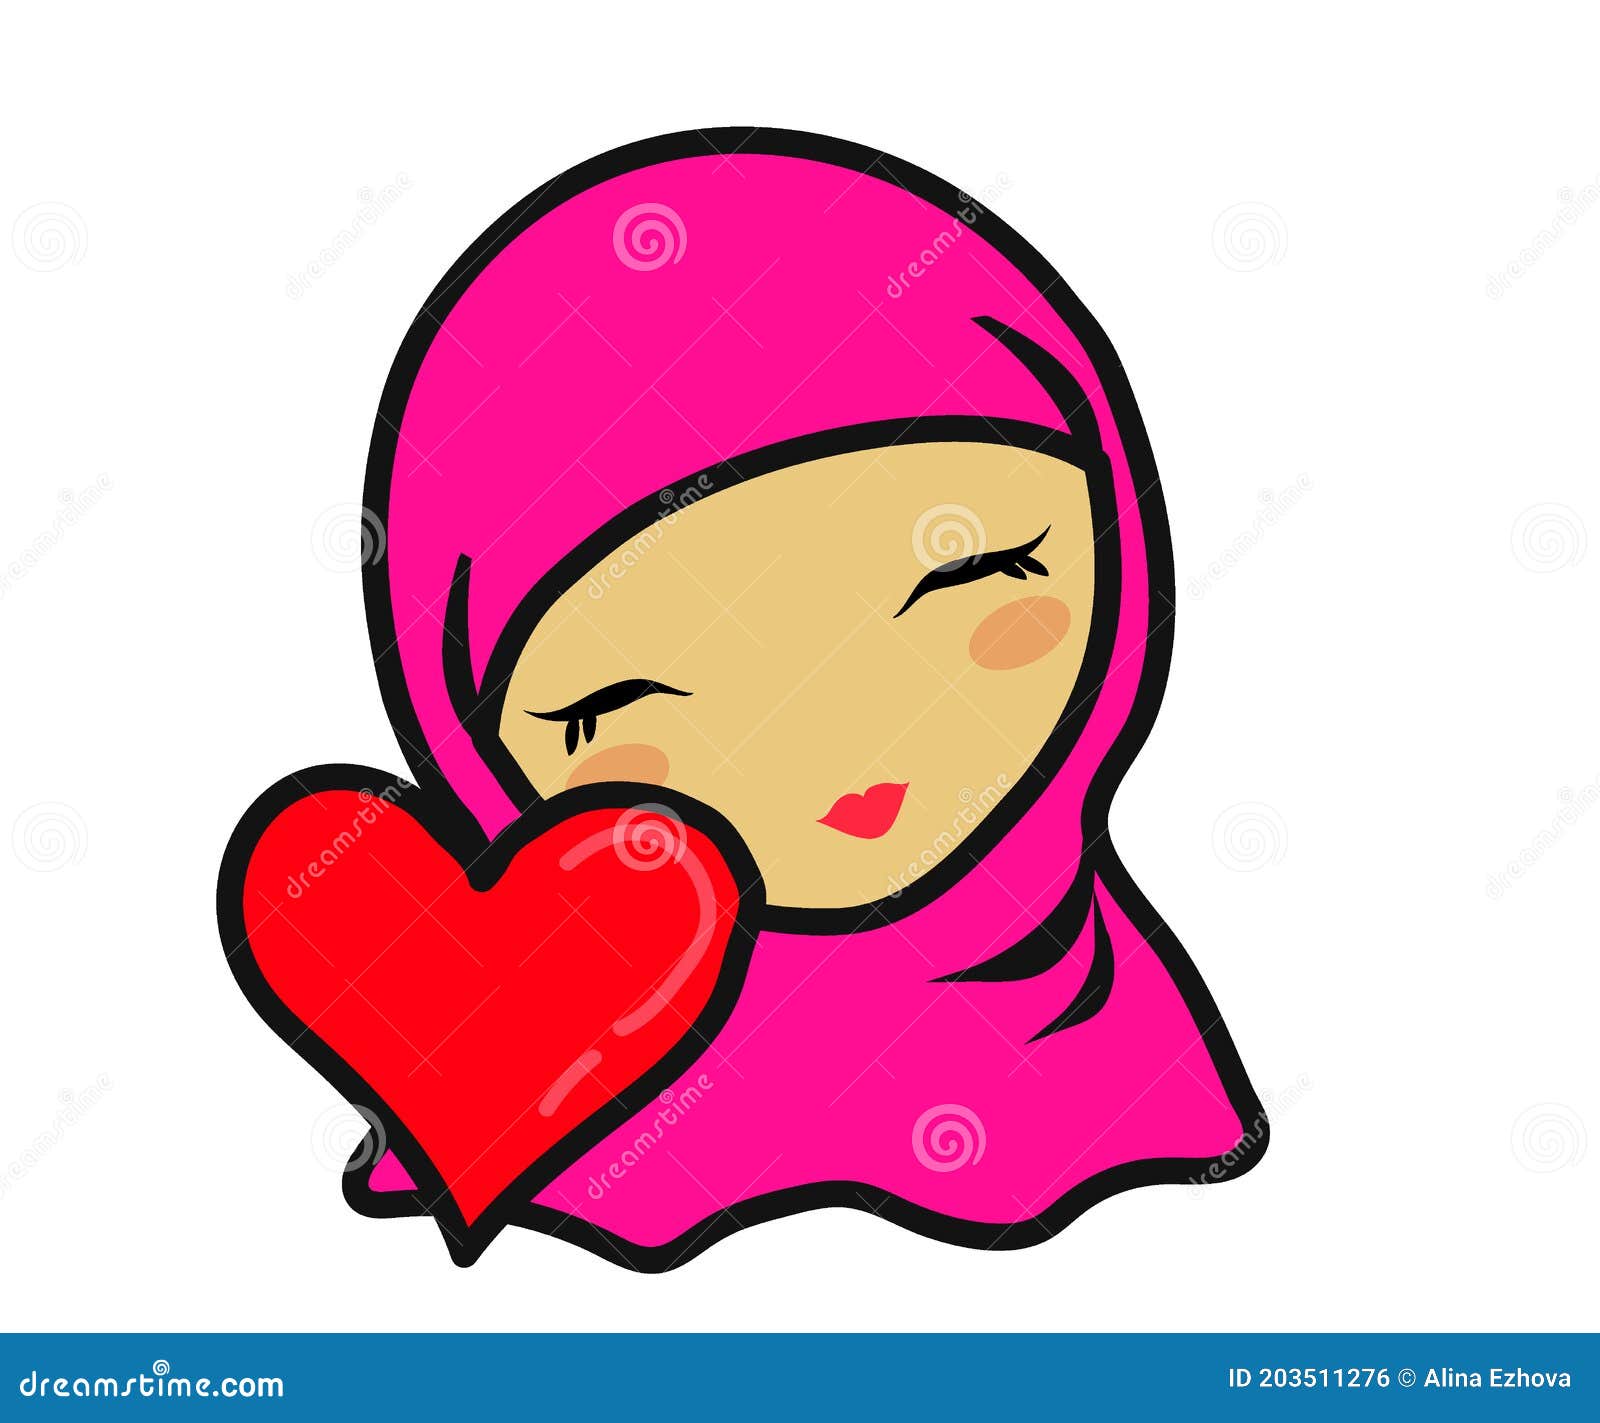 Muslim Beautiful Girl with Heart. Cartoon. Islamic Woman in a Headscarf  Stock Vector - Illustration of islam, valentine: 203511276